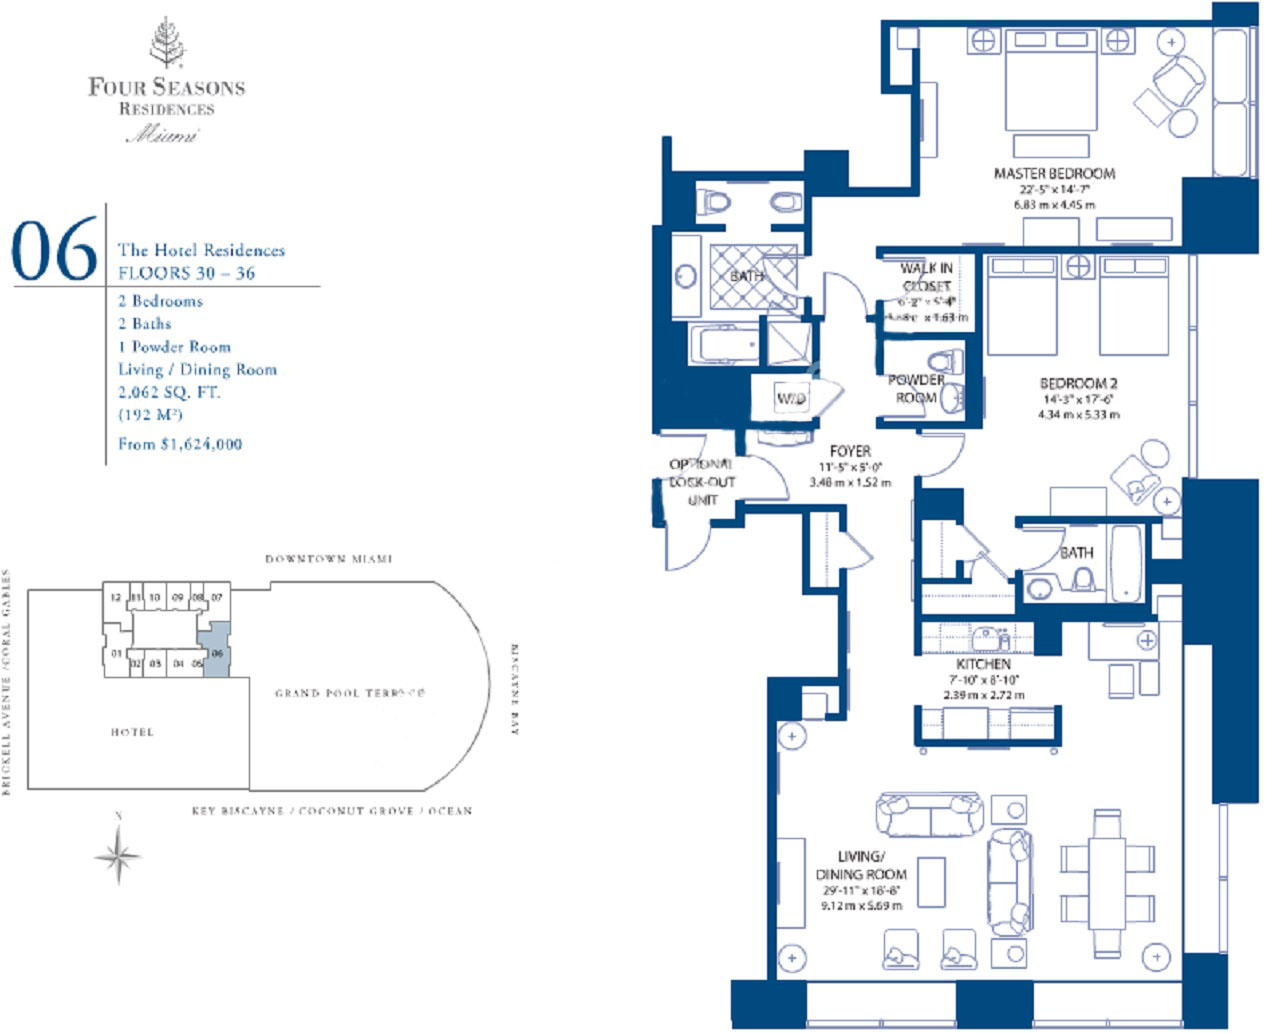 Four Seasons Condo Hotel Residences 06 Floors 30-36